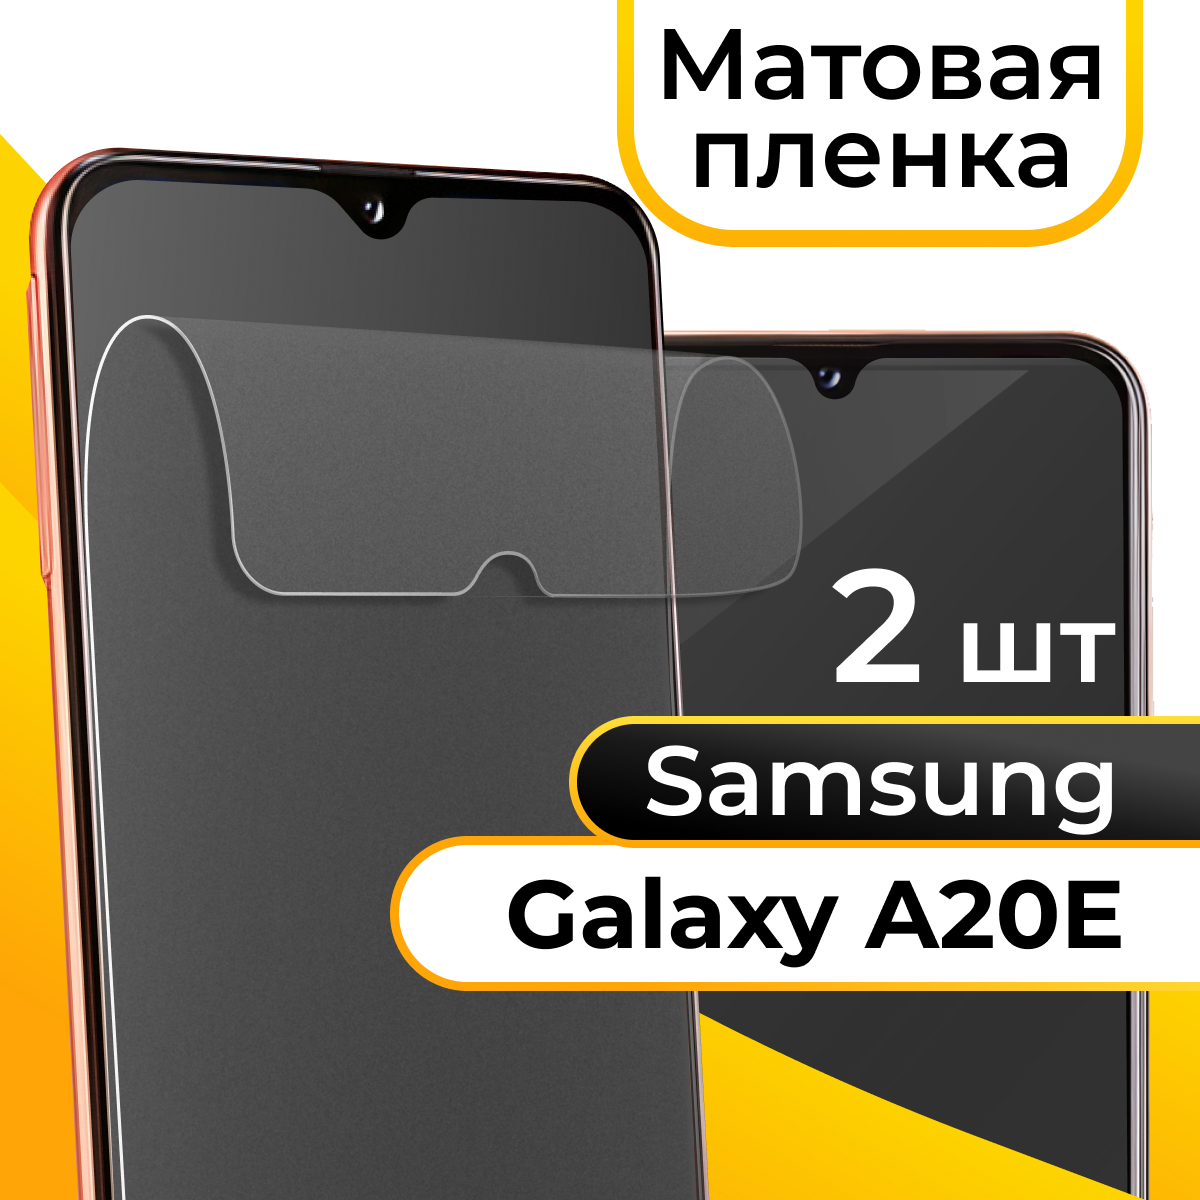 Комплект 2 шт. Матовая пленка для смартфона Samsung Galaxy A20E / Защитная противоударная пленка на телефон Самсунг Галакси А20Е / Гидрогелевая пленка